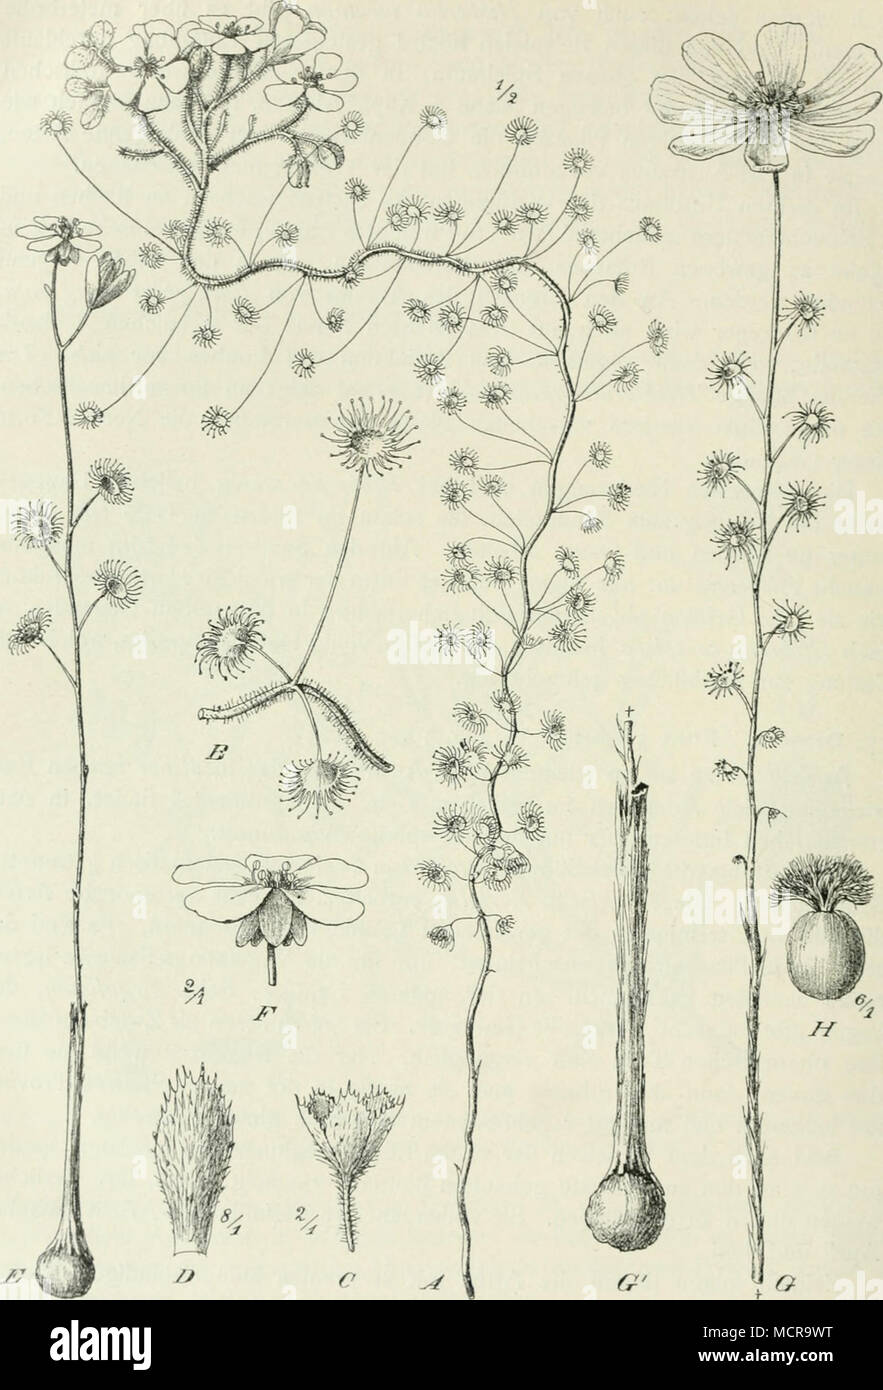 . t.g. 30. Droseraceae der Südwest-Provinz: A-D Drosera macrautha Endl.: A Habitus i/Llatter. C Kelch. Z) Kelchblatt. - E, F D. microphylla Y.r.^.: £ Habitus. J^ Blüte. - G-H D.heterophylla Lindl.: G Habitus. // Gynaeceum. (Nach Diels in Pflanzenreich.) Stock Photo